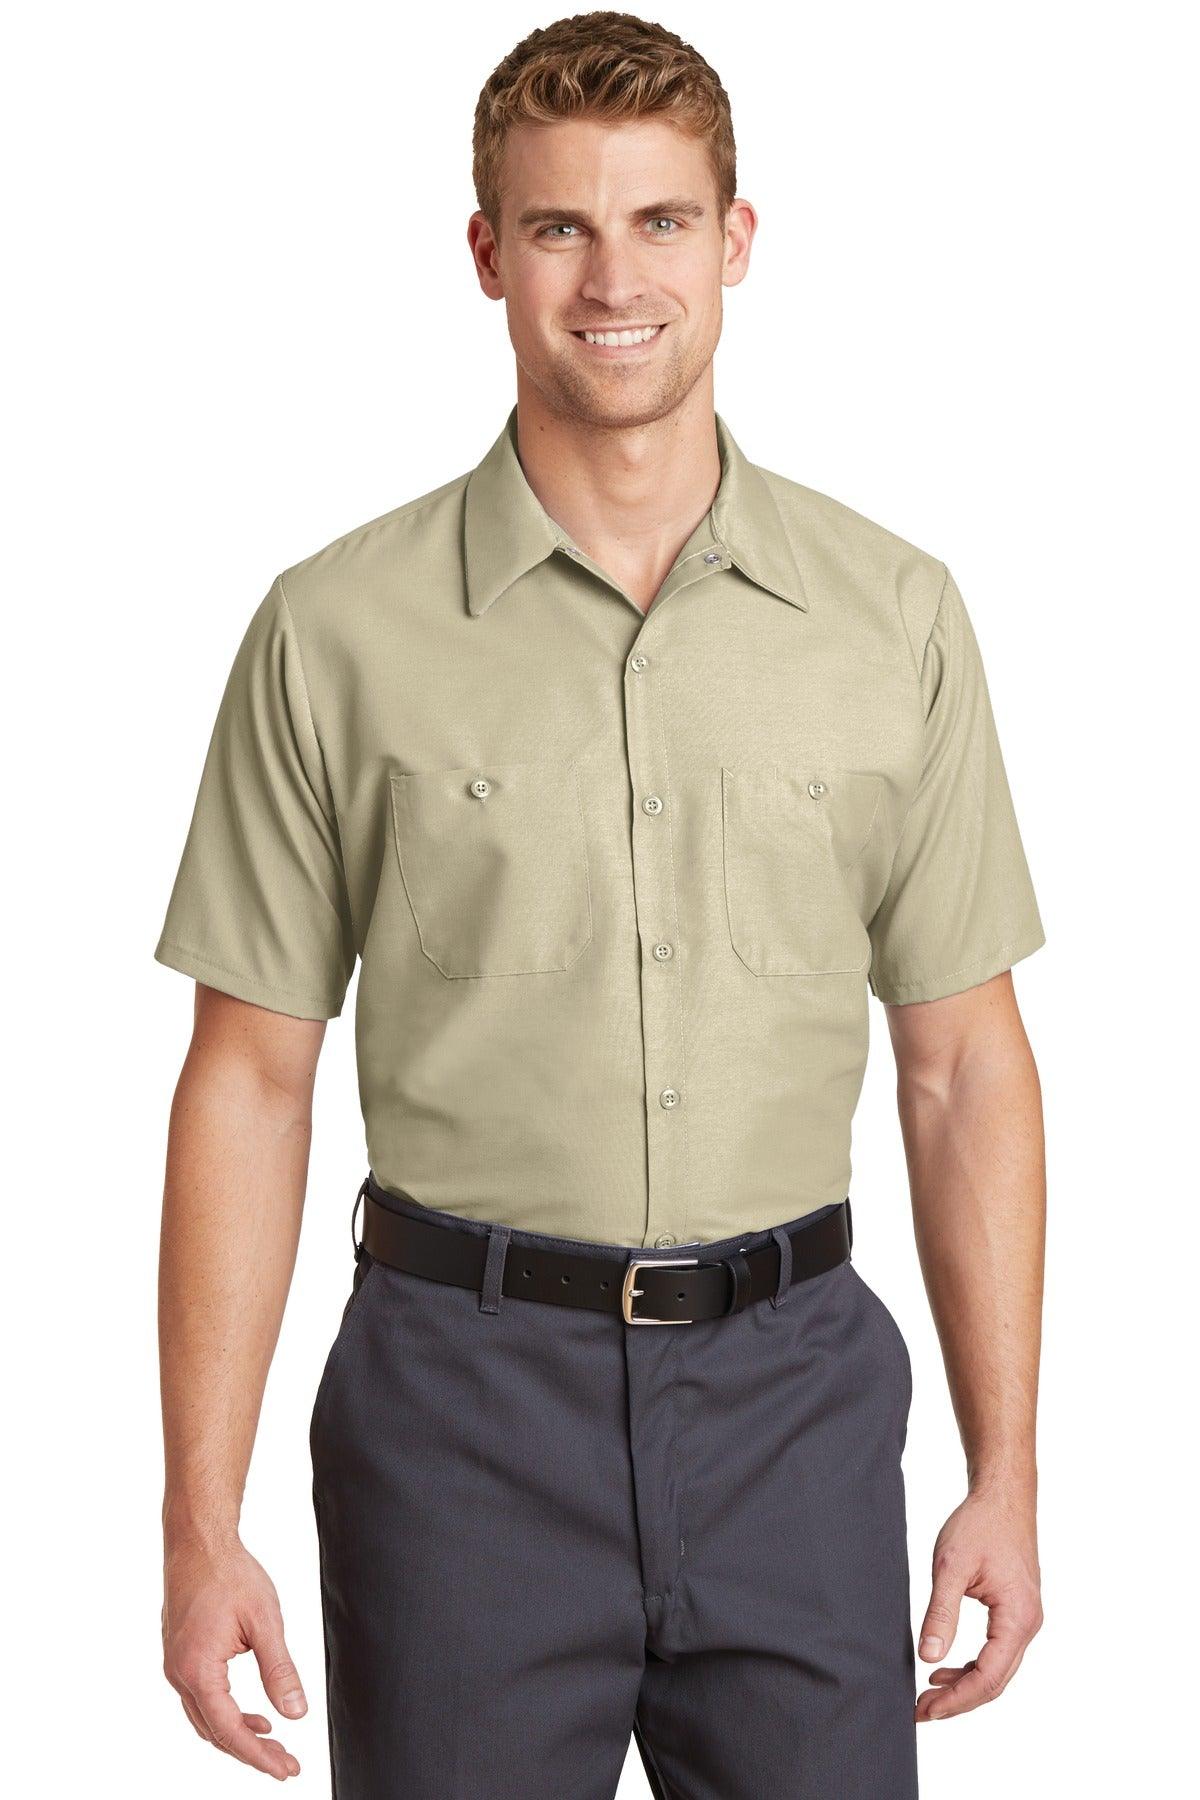 Red Kap Long Size, Short Sleeve Industrial Work Shirt. SP24LONG - Dresses Max